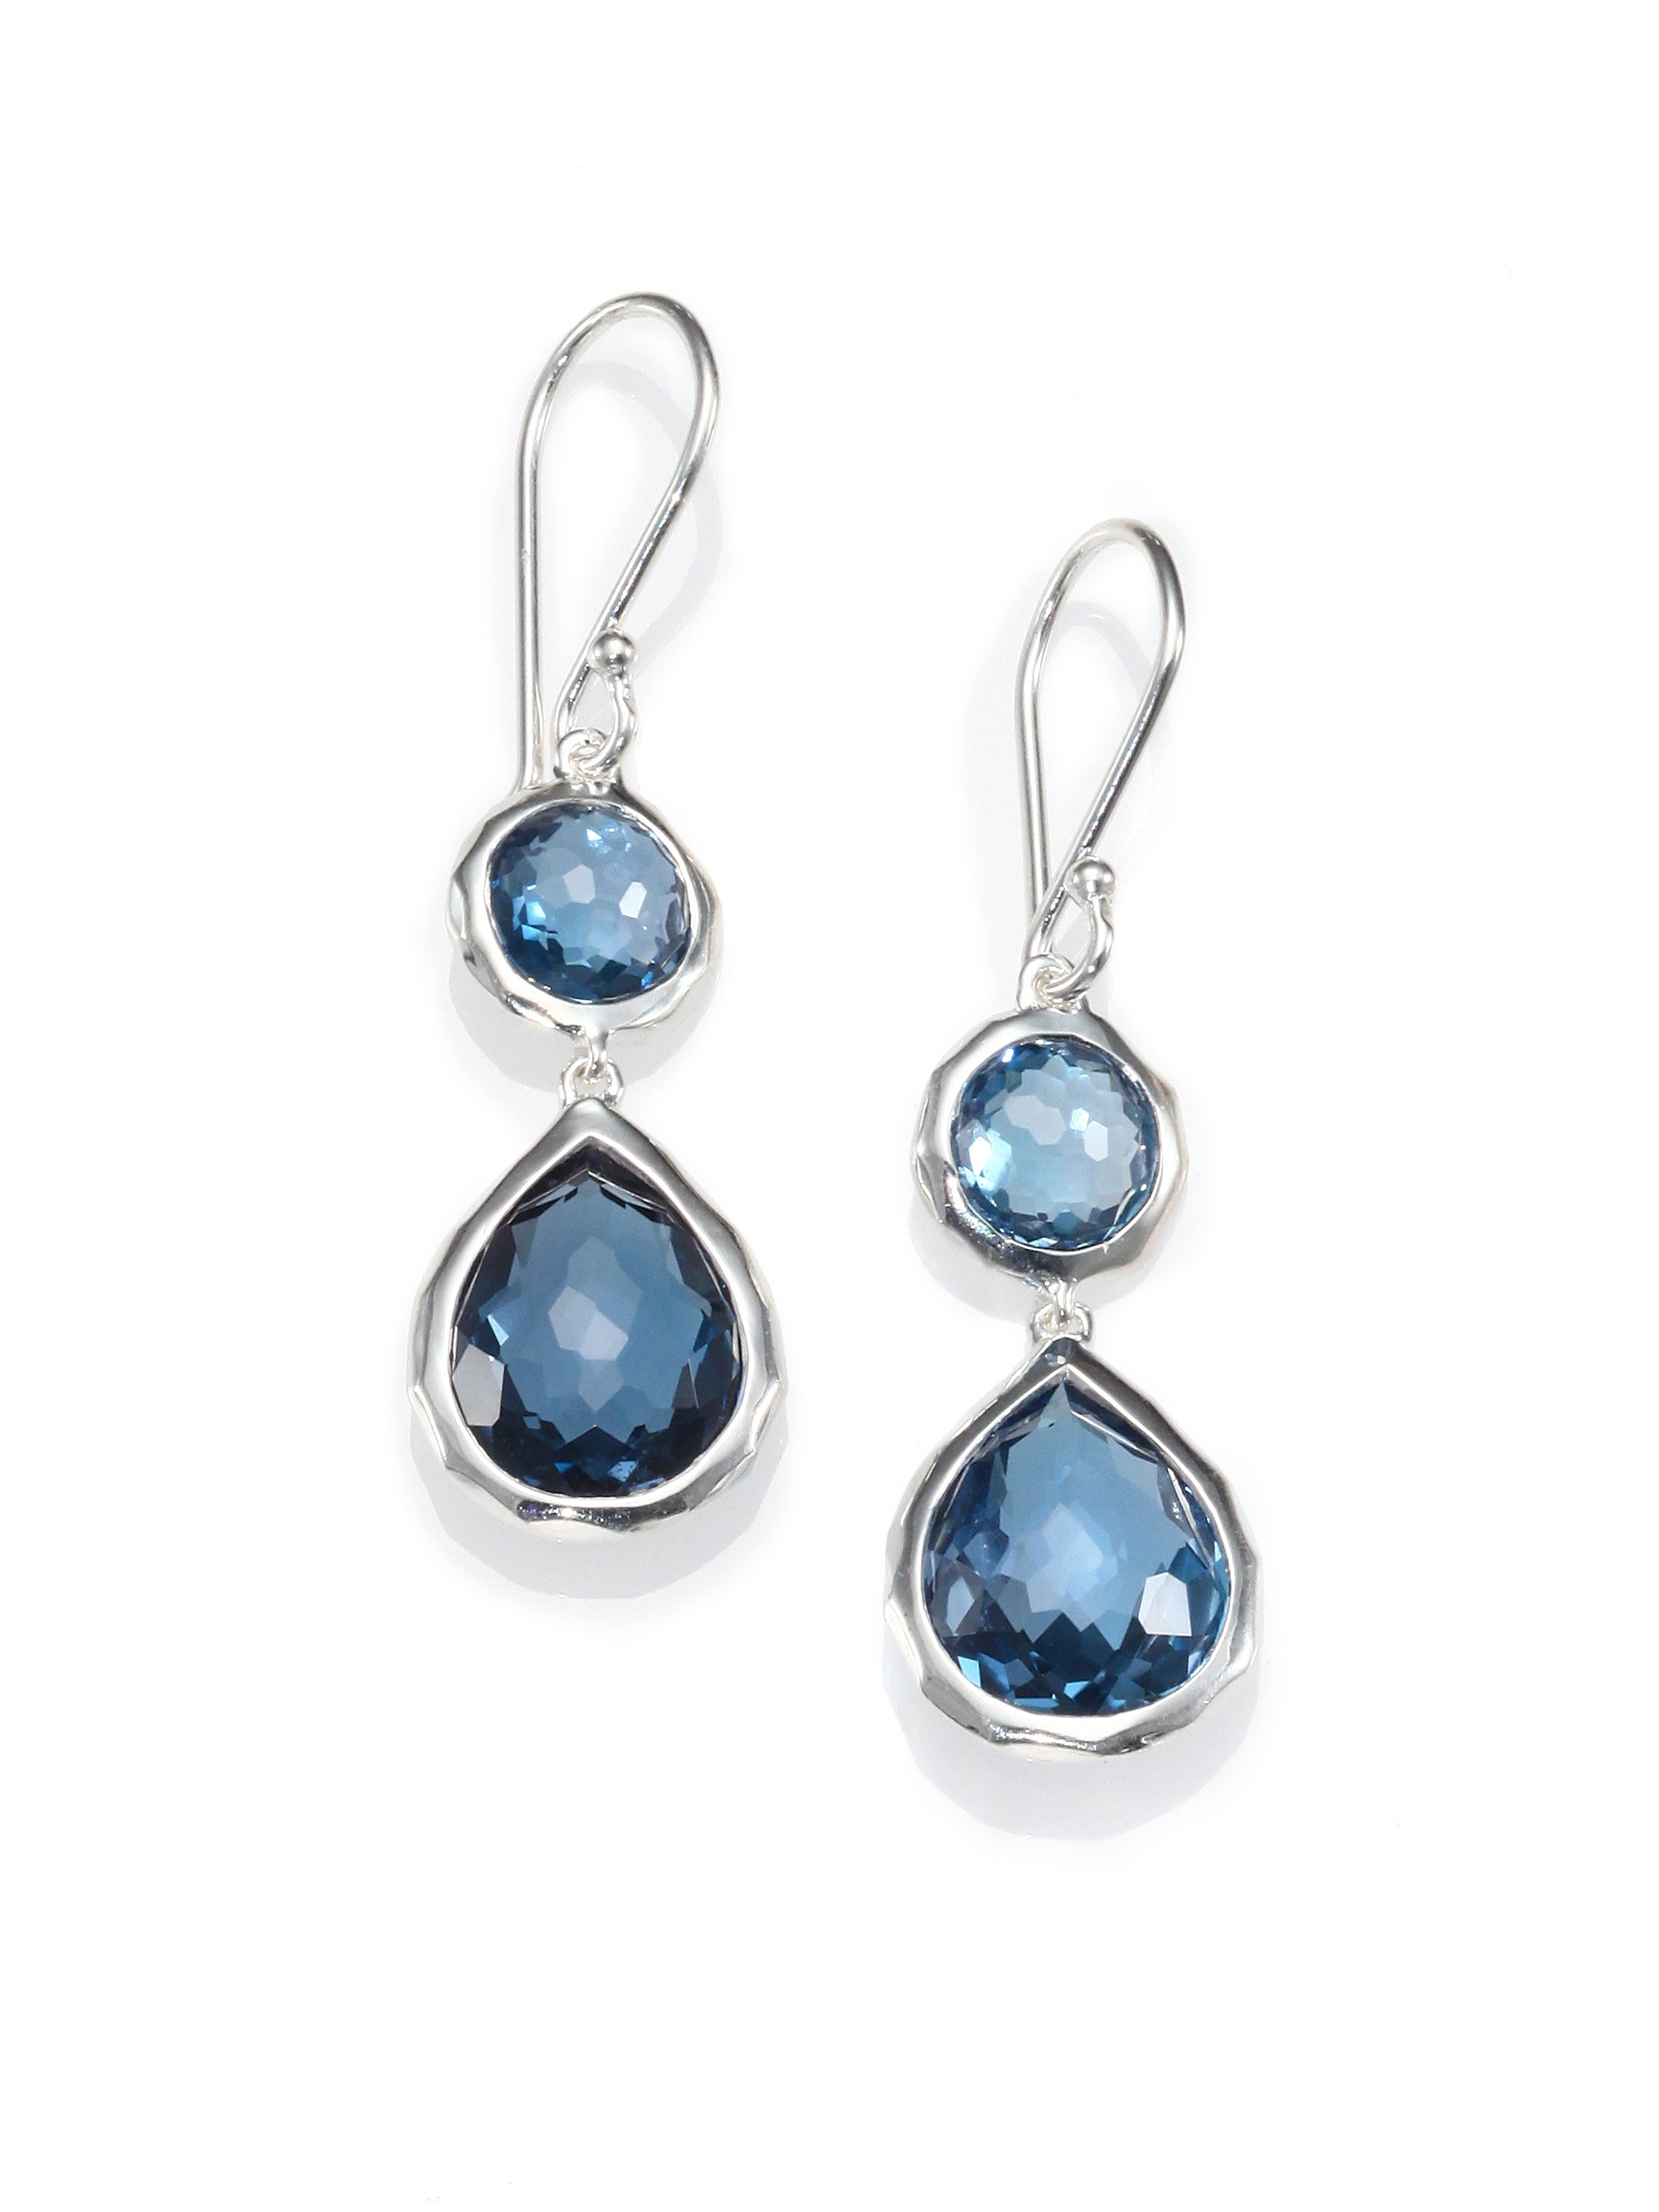 Ippolita London Blue Topaz and Sterling Silver Earrings in Blue (SILVER ...